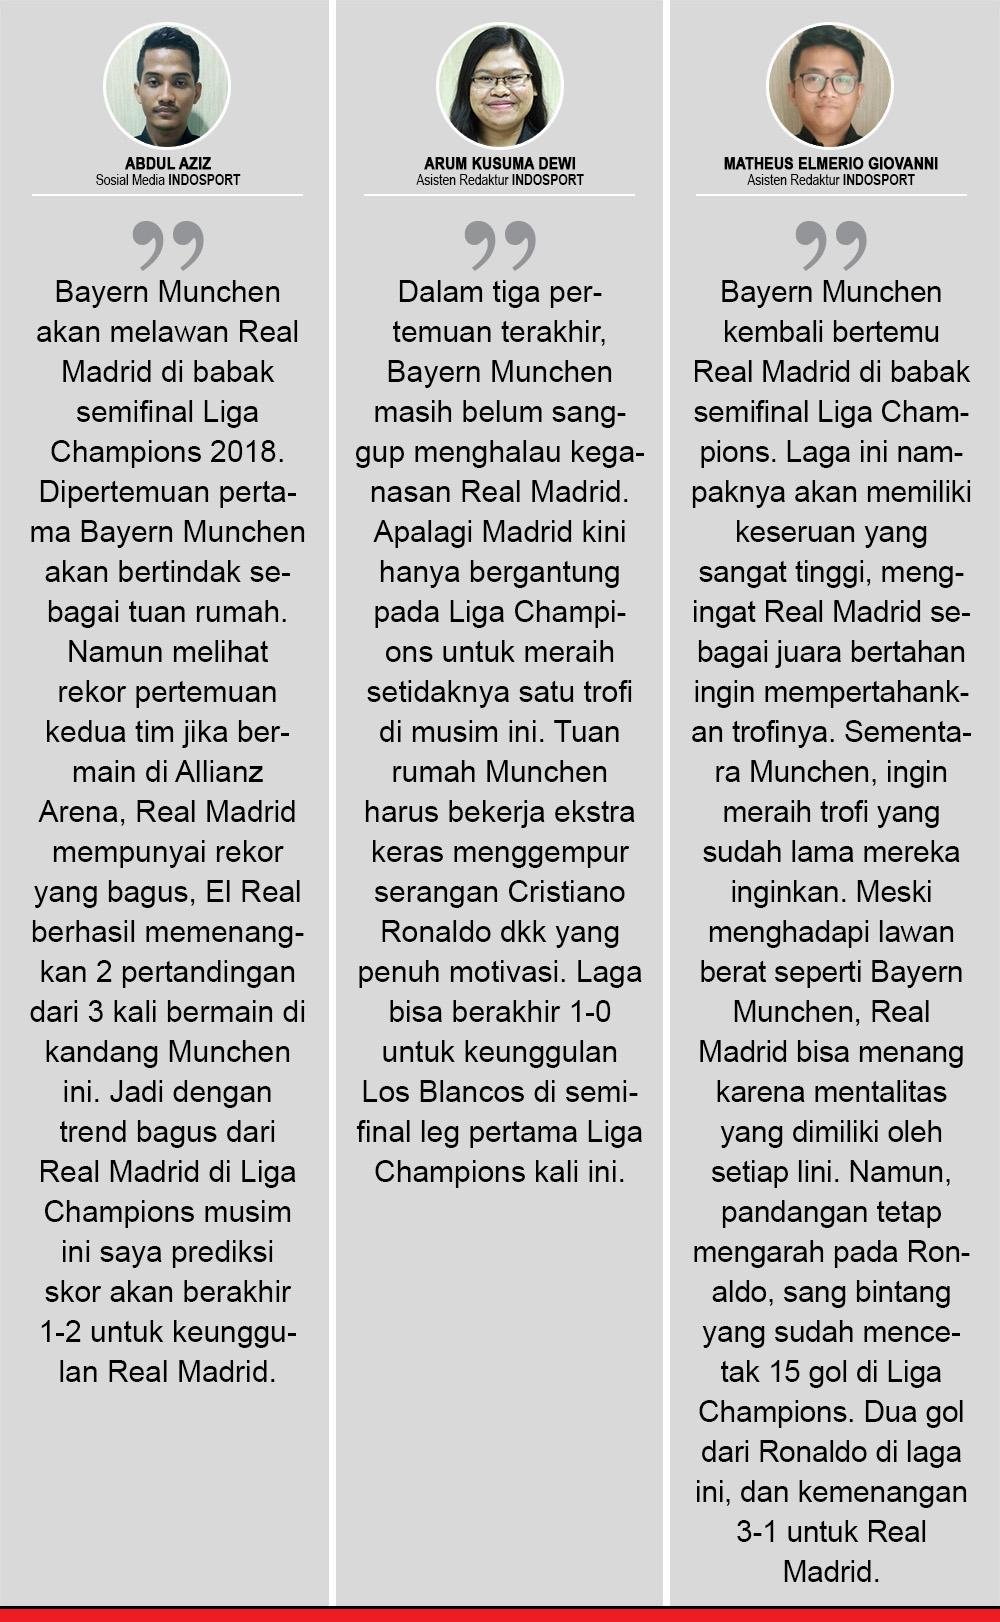 Komentar Prediksi Bayern Munchen vs Real Madrid Copyright: Indosport.com